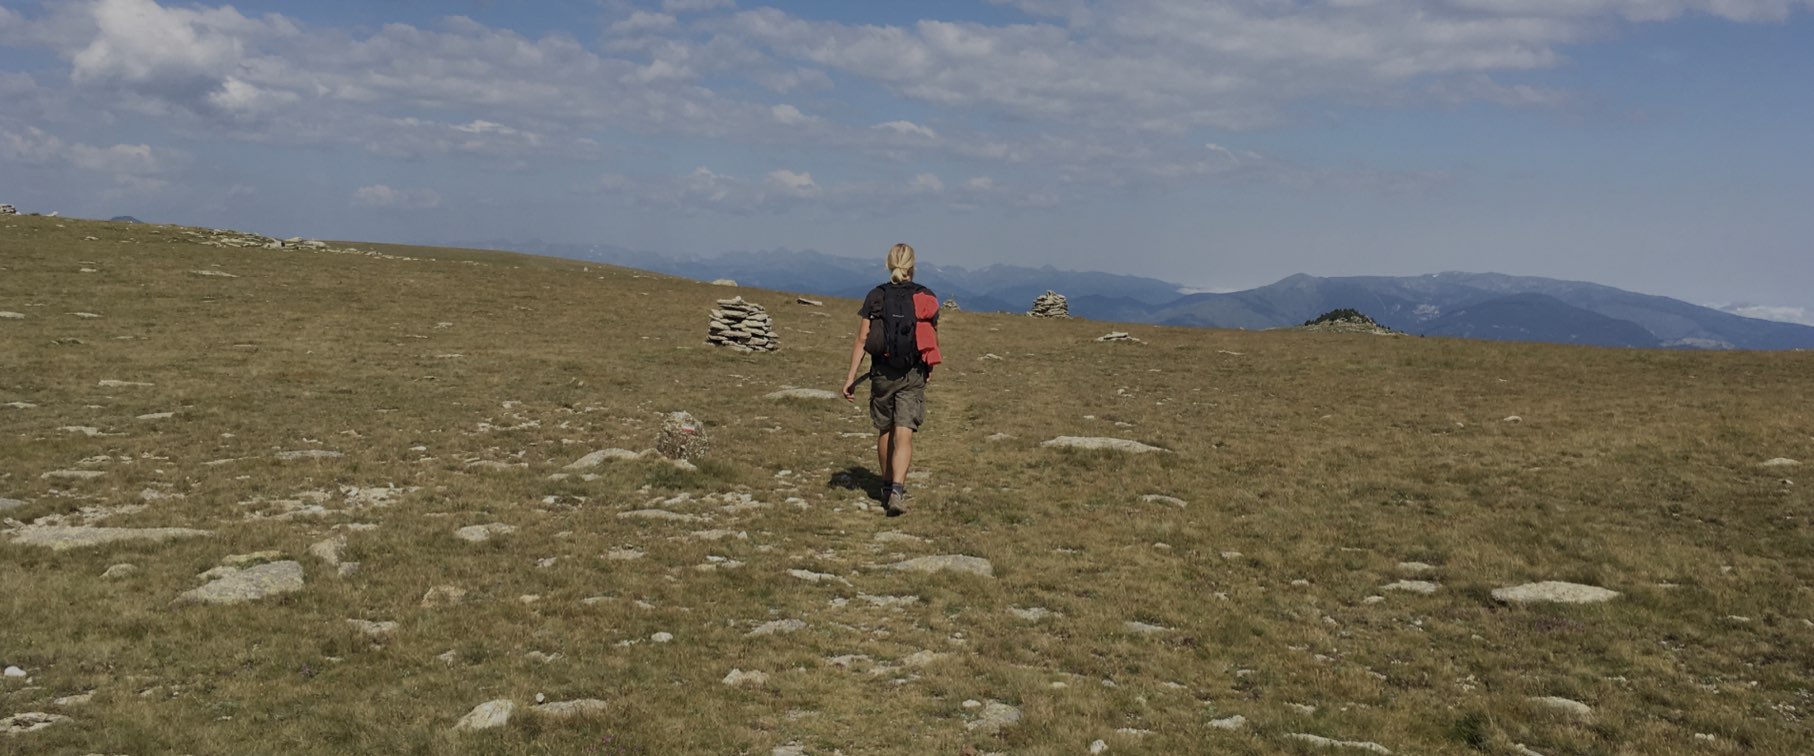 Ontmoet Bastiaan: onze lokale gids op de Mountain Trail